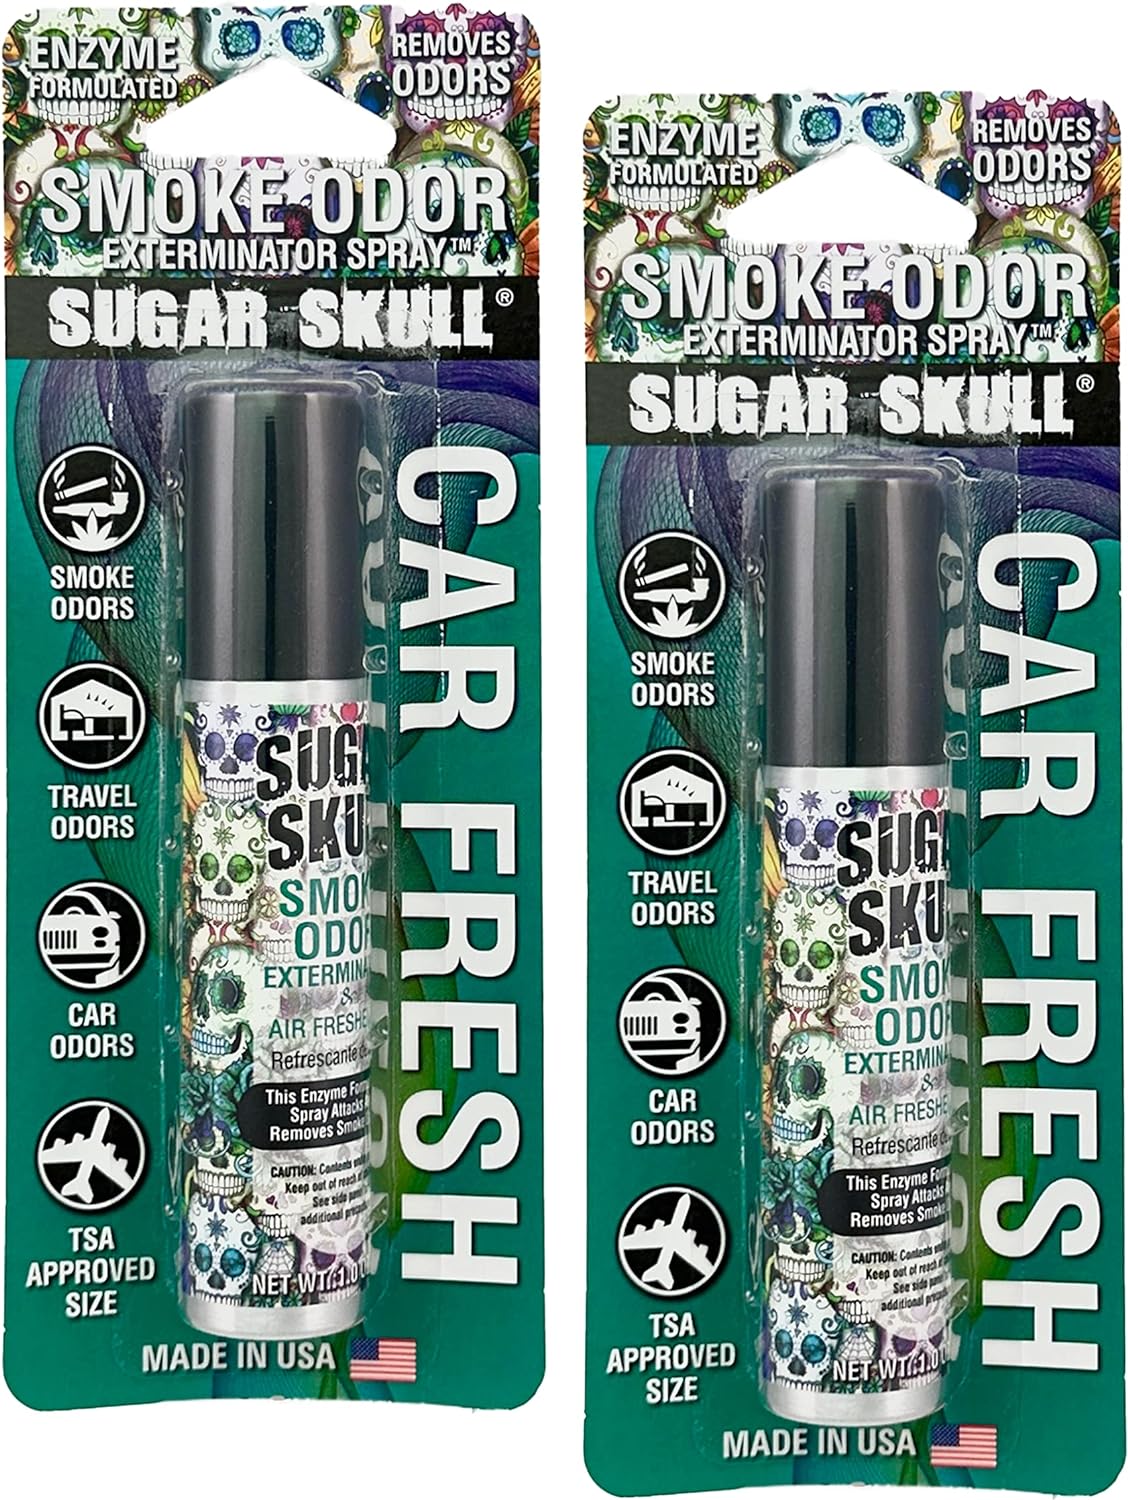 Smoke Odor Exterminator Air Fresh Spray - Your Ultimate Solution for Smoke and Household Odor Elimination - 1 oz Spray (Sugar Skull, 2 Packs) : Health & Household